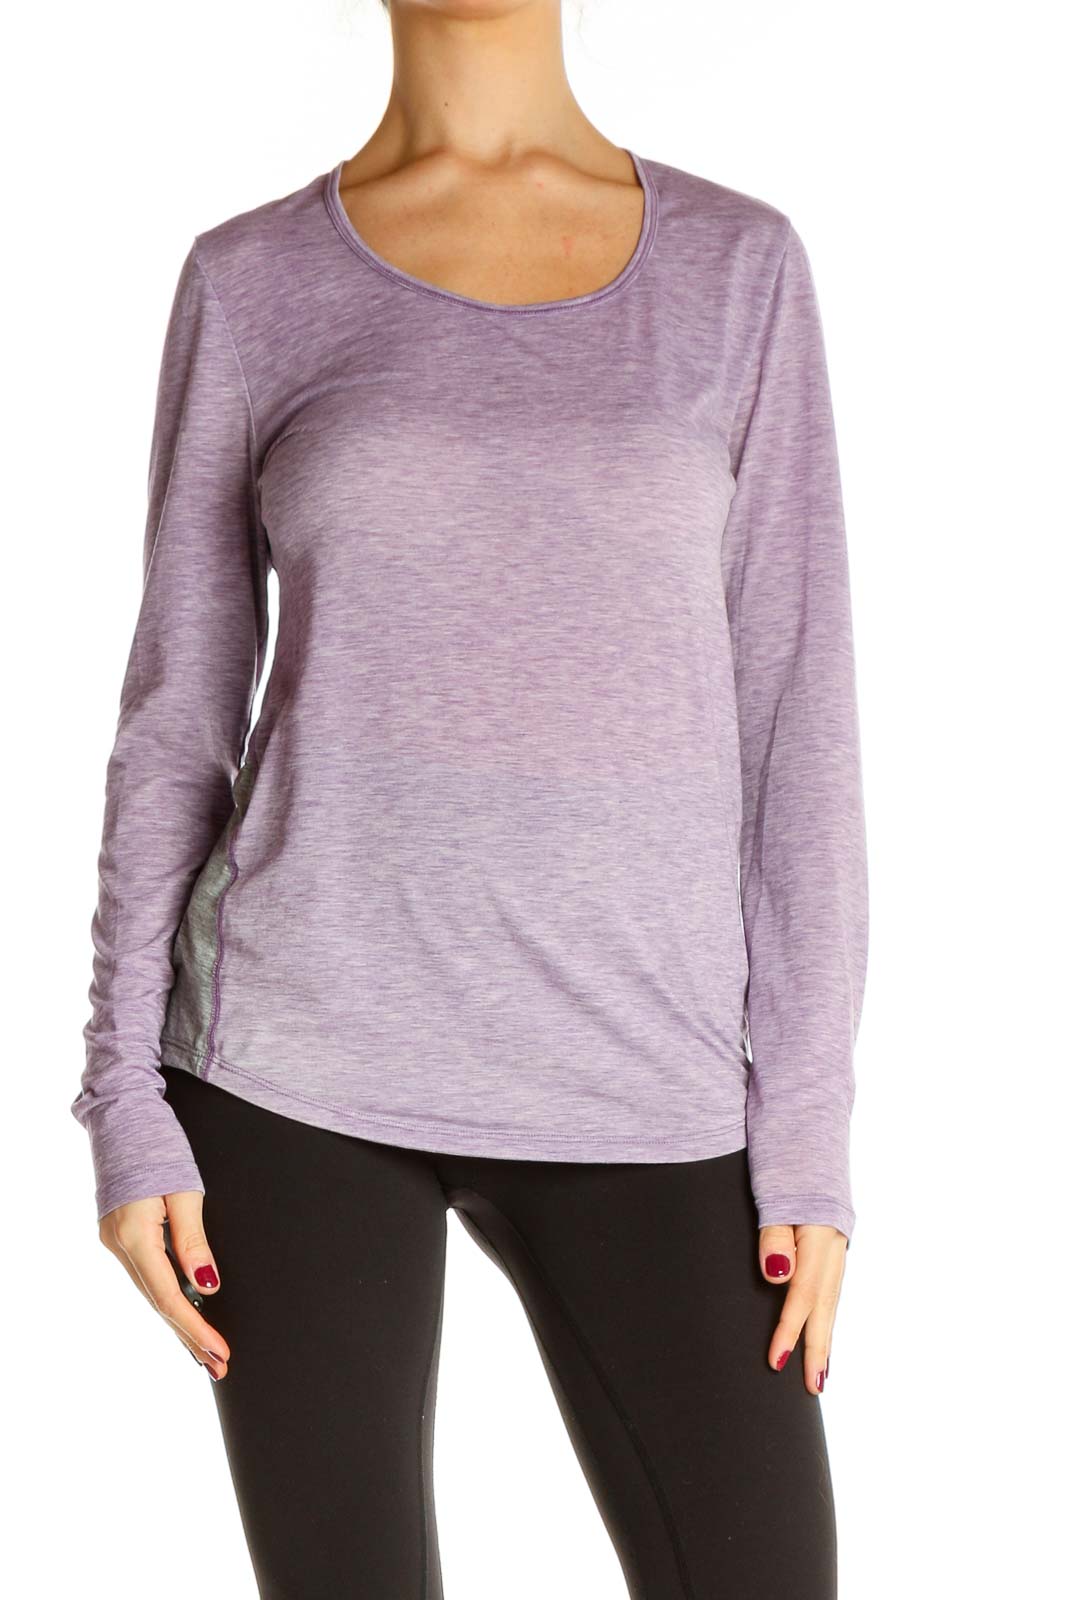 Purple Sweatshirt Front